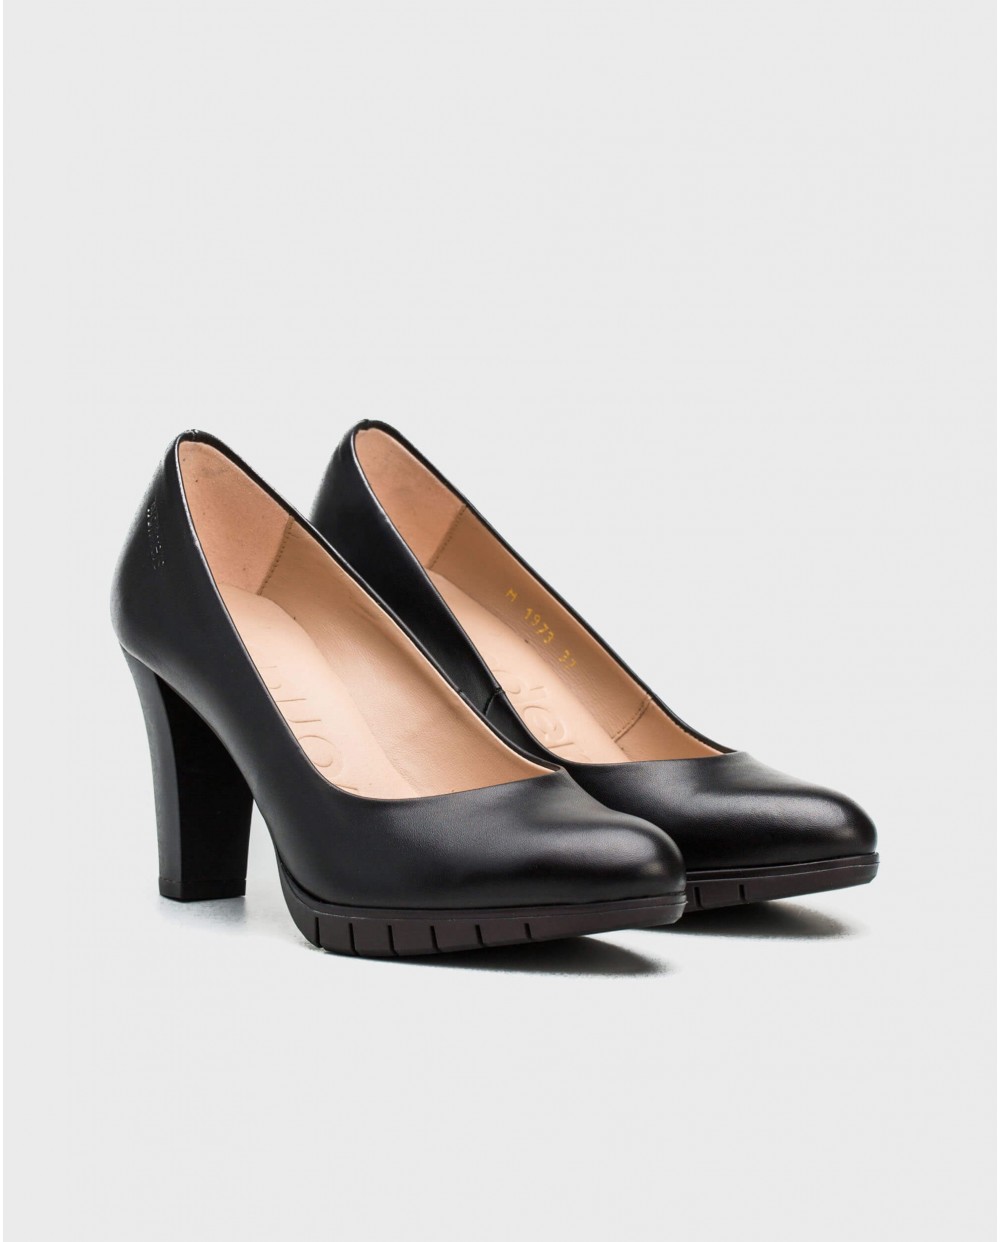 Wonders-Heels-High heeled leather court shoe